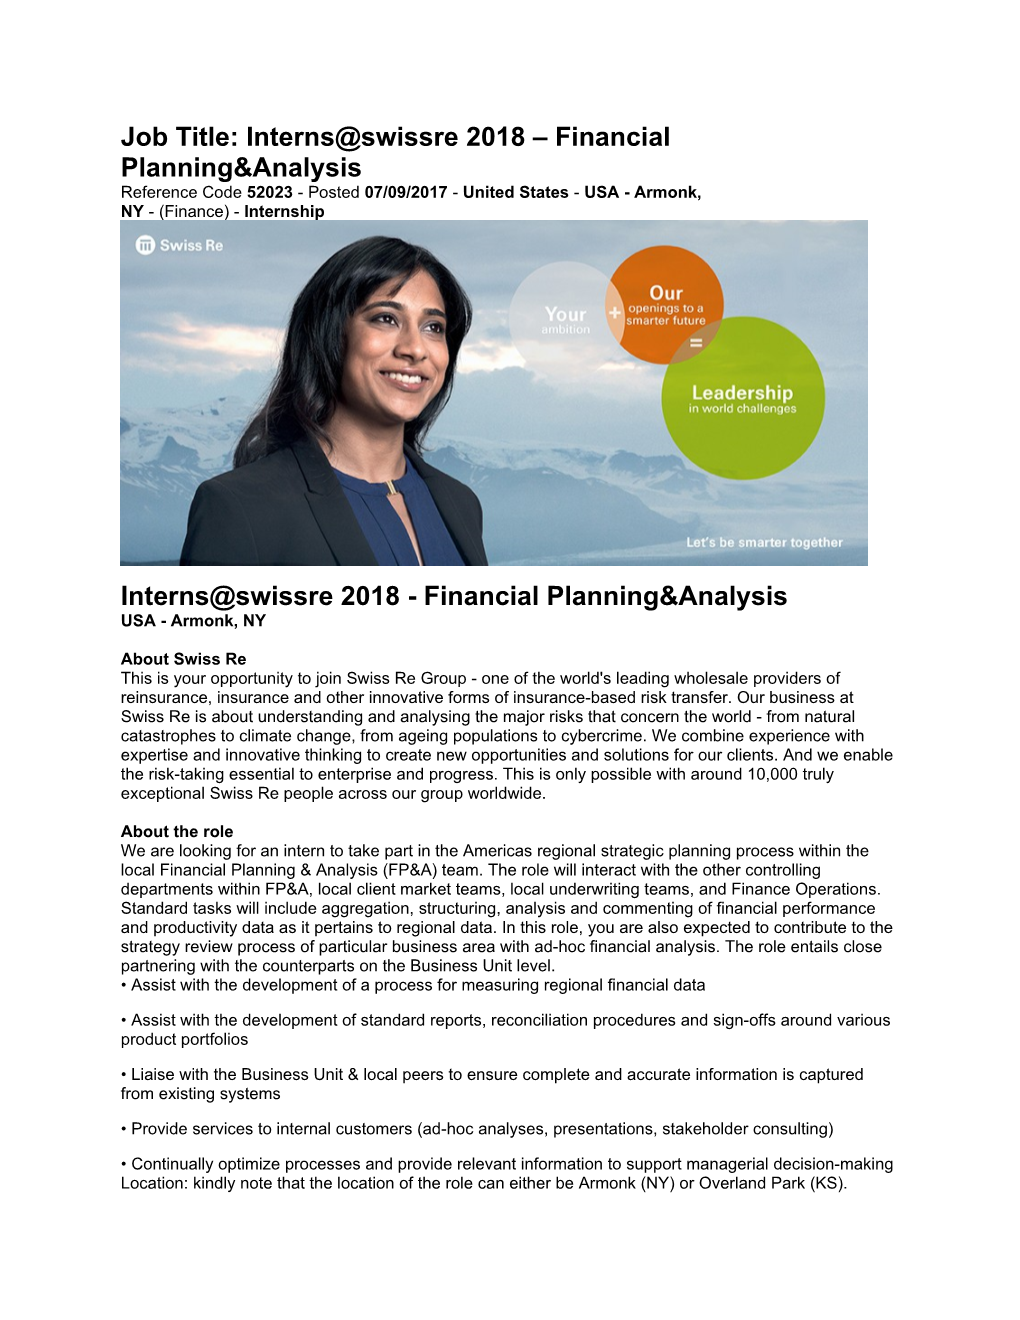 Job Title: Interns Swissre 2018 Financial Planning&Analysis